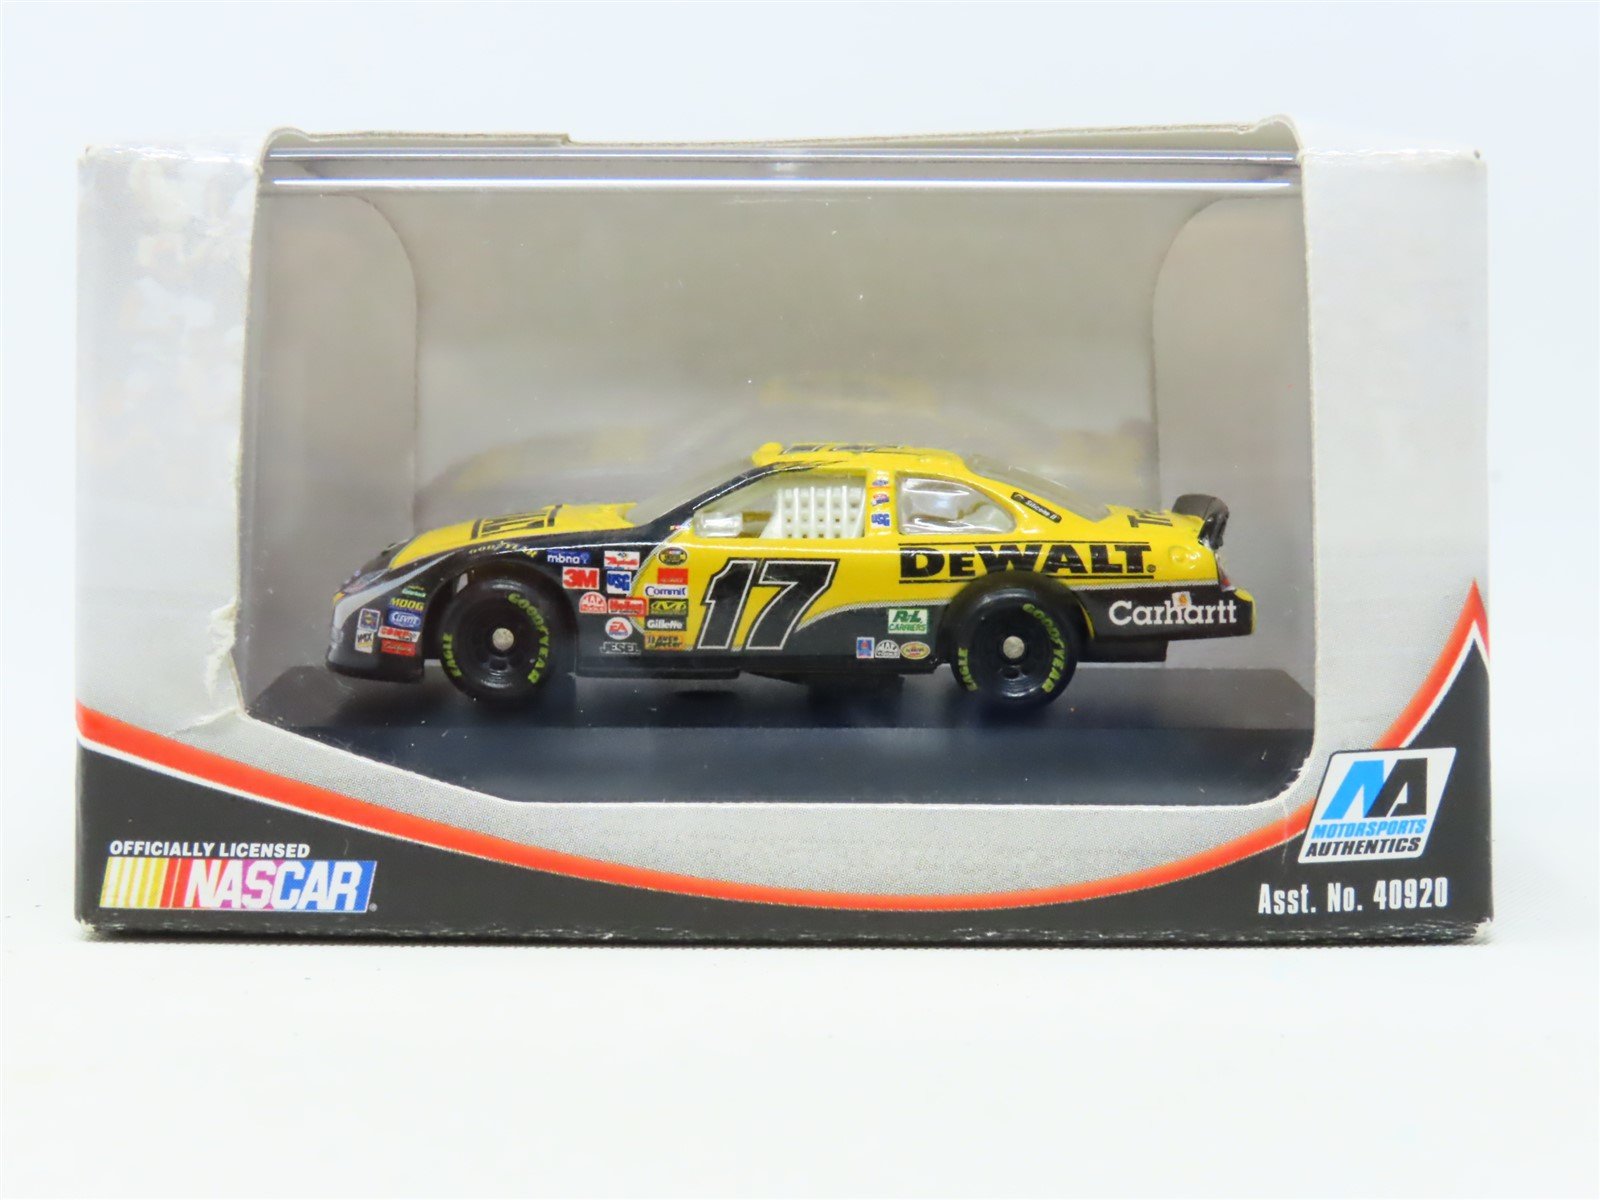 HO 1/87 Scale Winner's Circle NASCAR #47659 DeWalt - Matt Kenseth Car #17